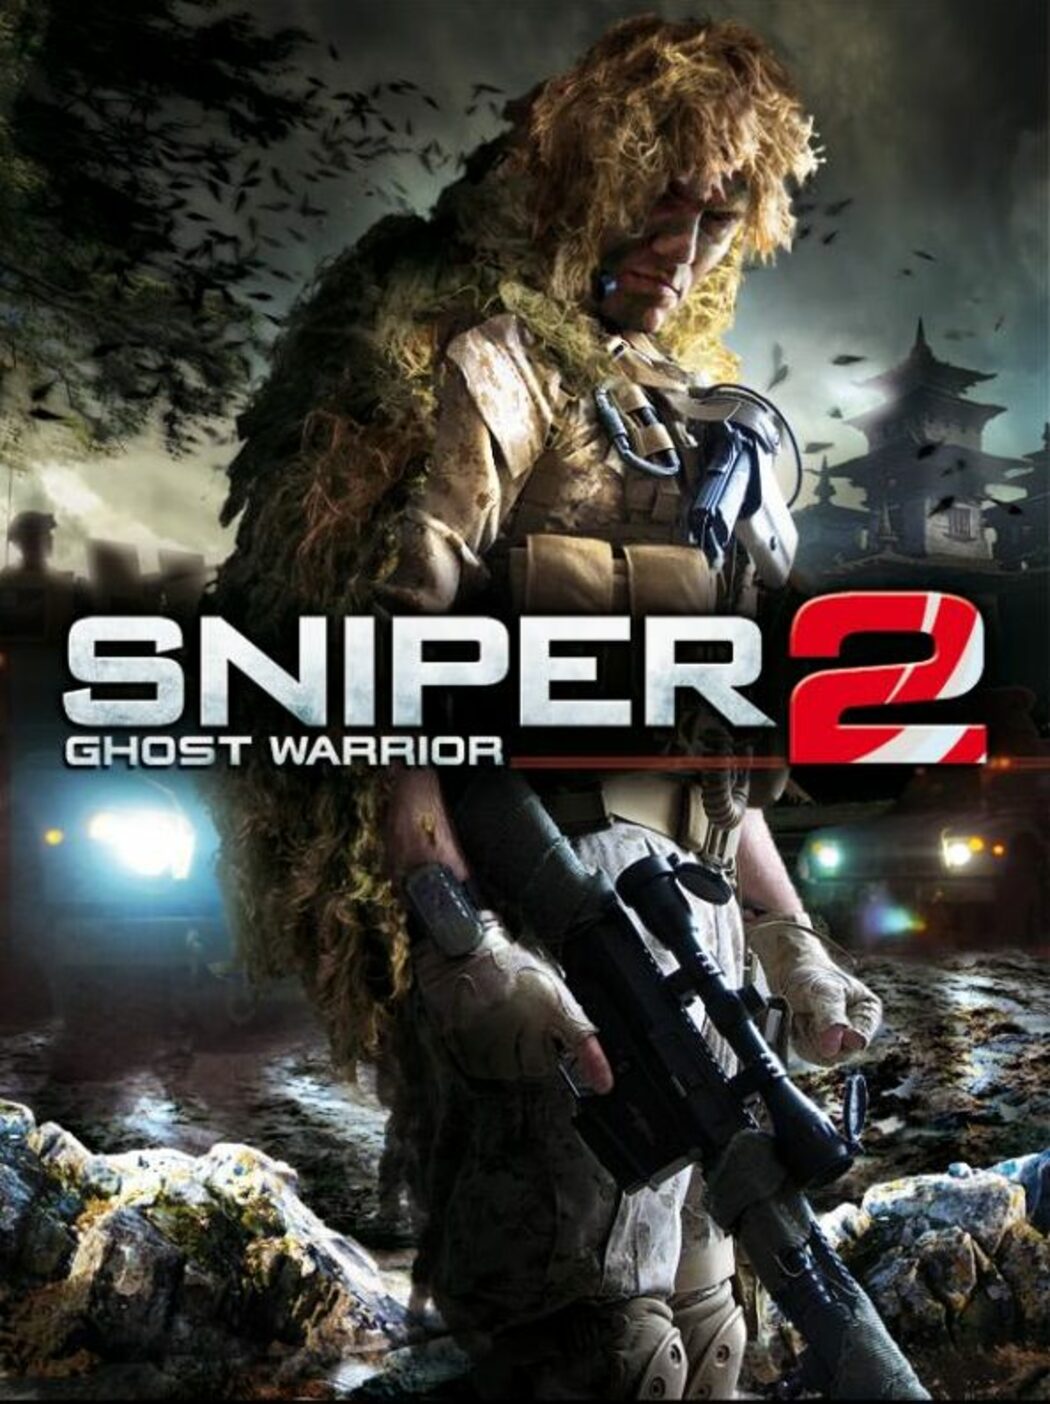 sniper ghost warrior 2